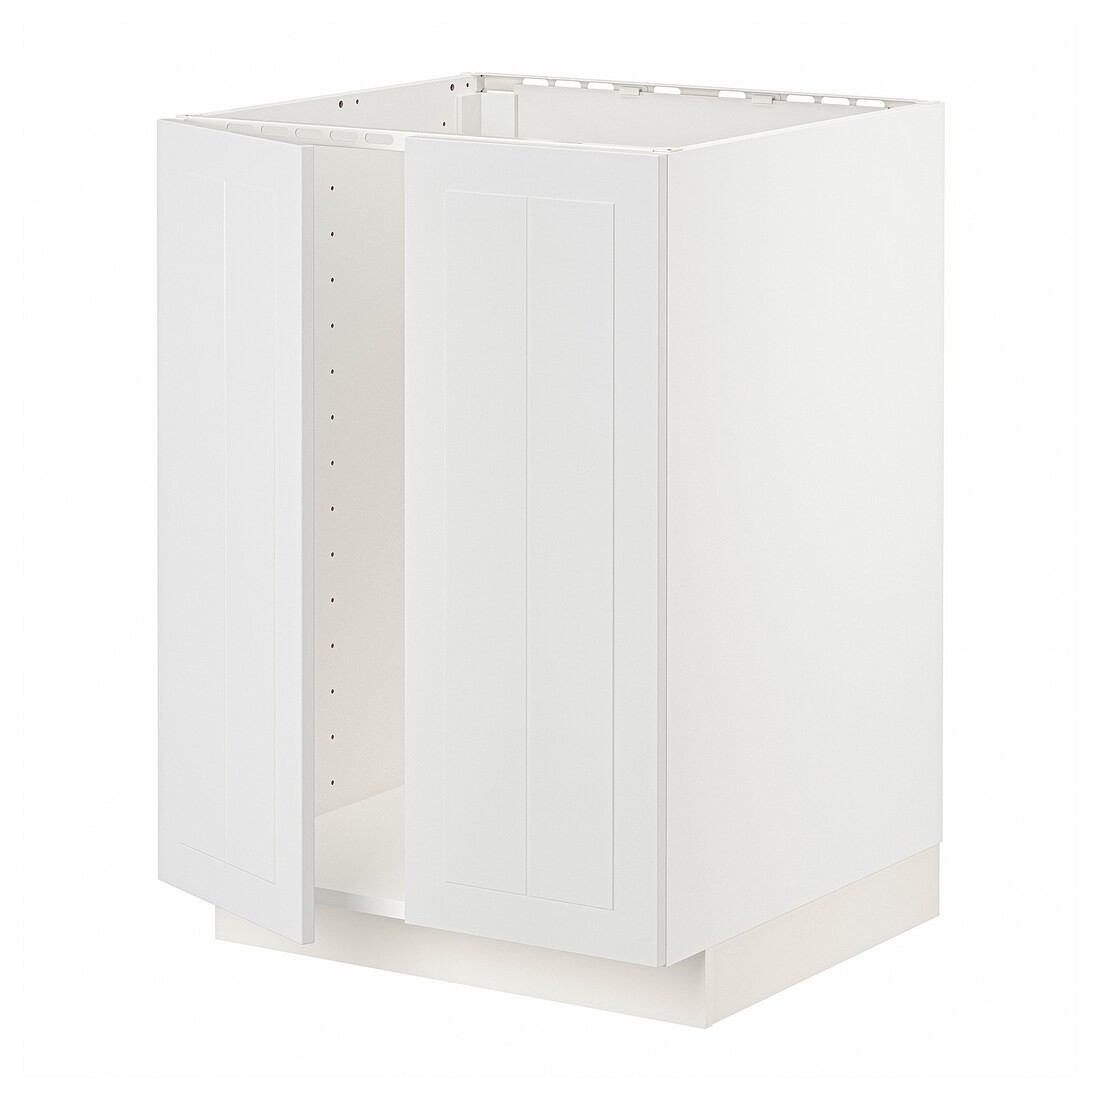 IKEA METOD МЕТОД Напольный шкаф для мойки, белый / Stensund белый, 60x60 см 39456310 394.563.10